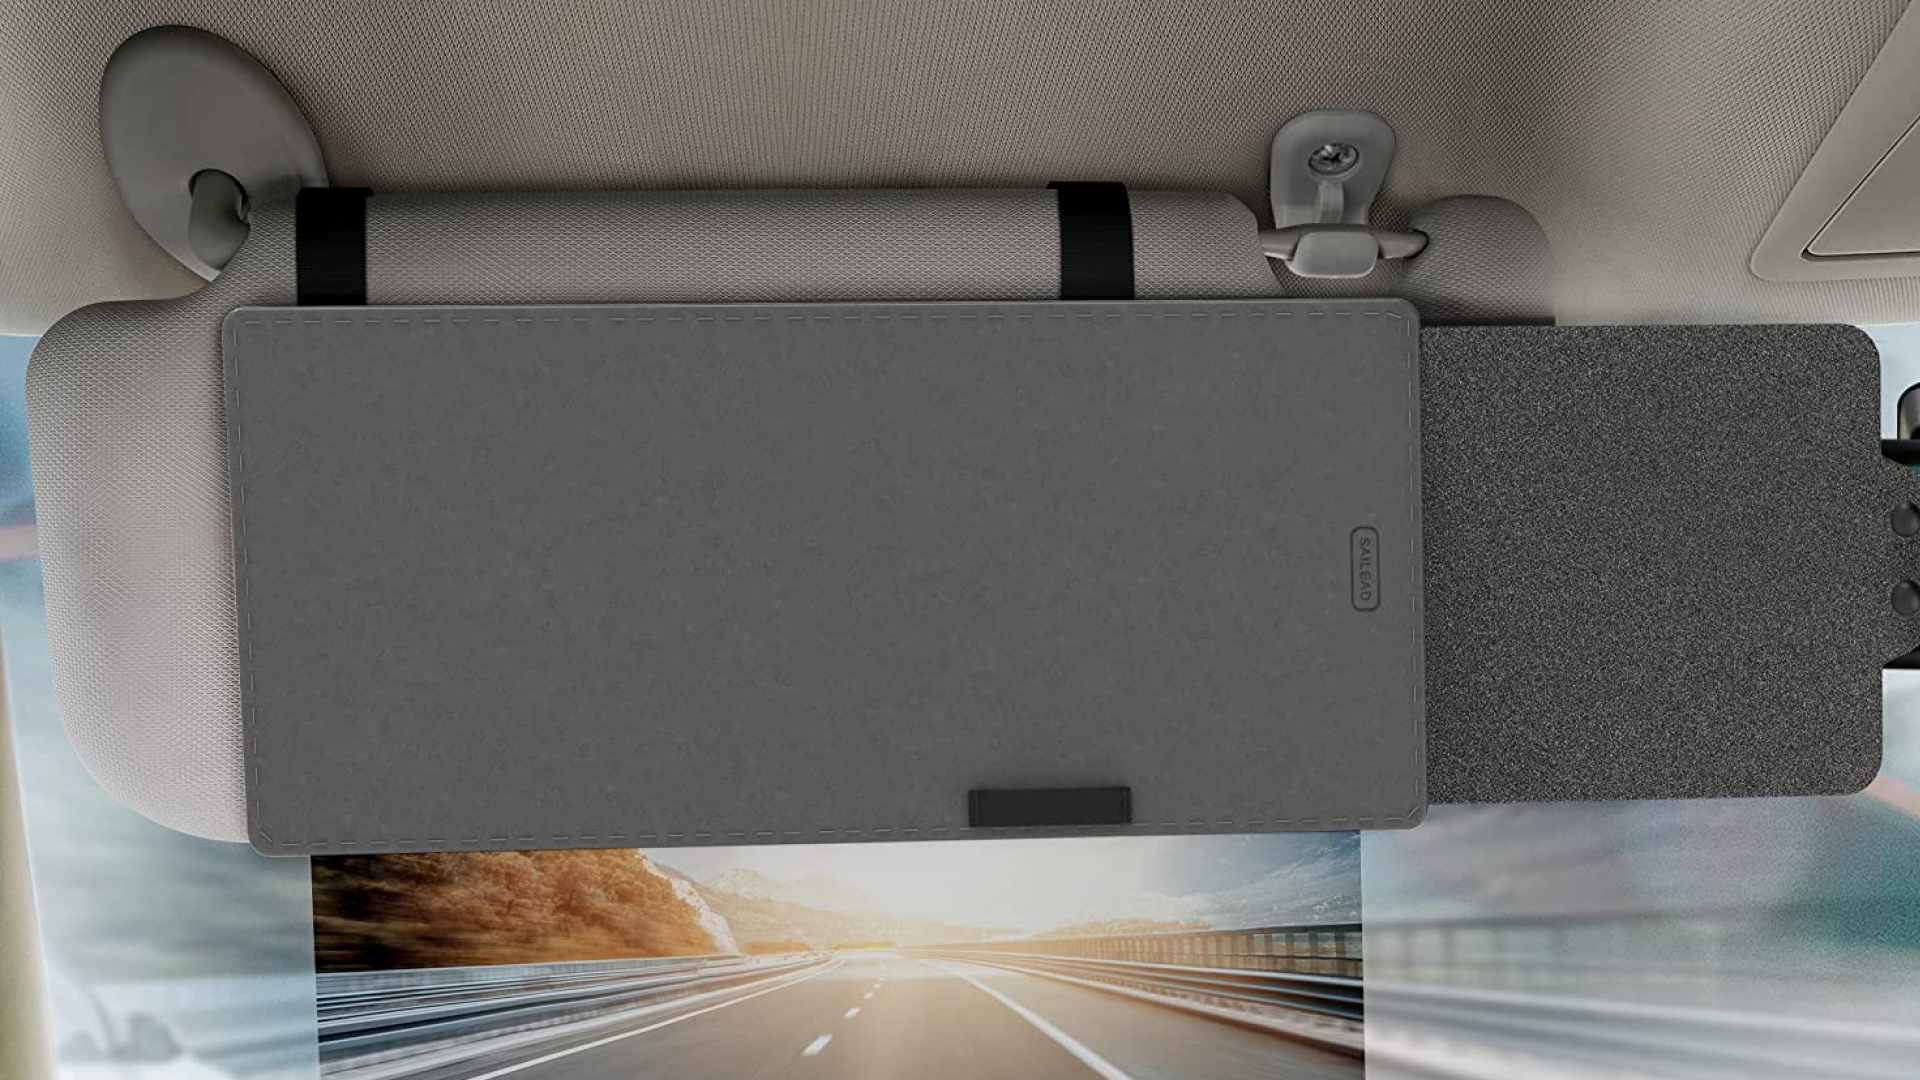 car visor extender to help dim headlights and prevent glare